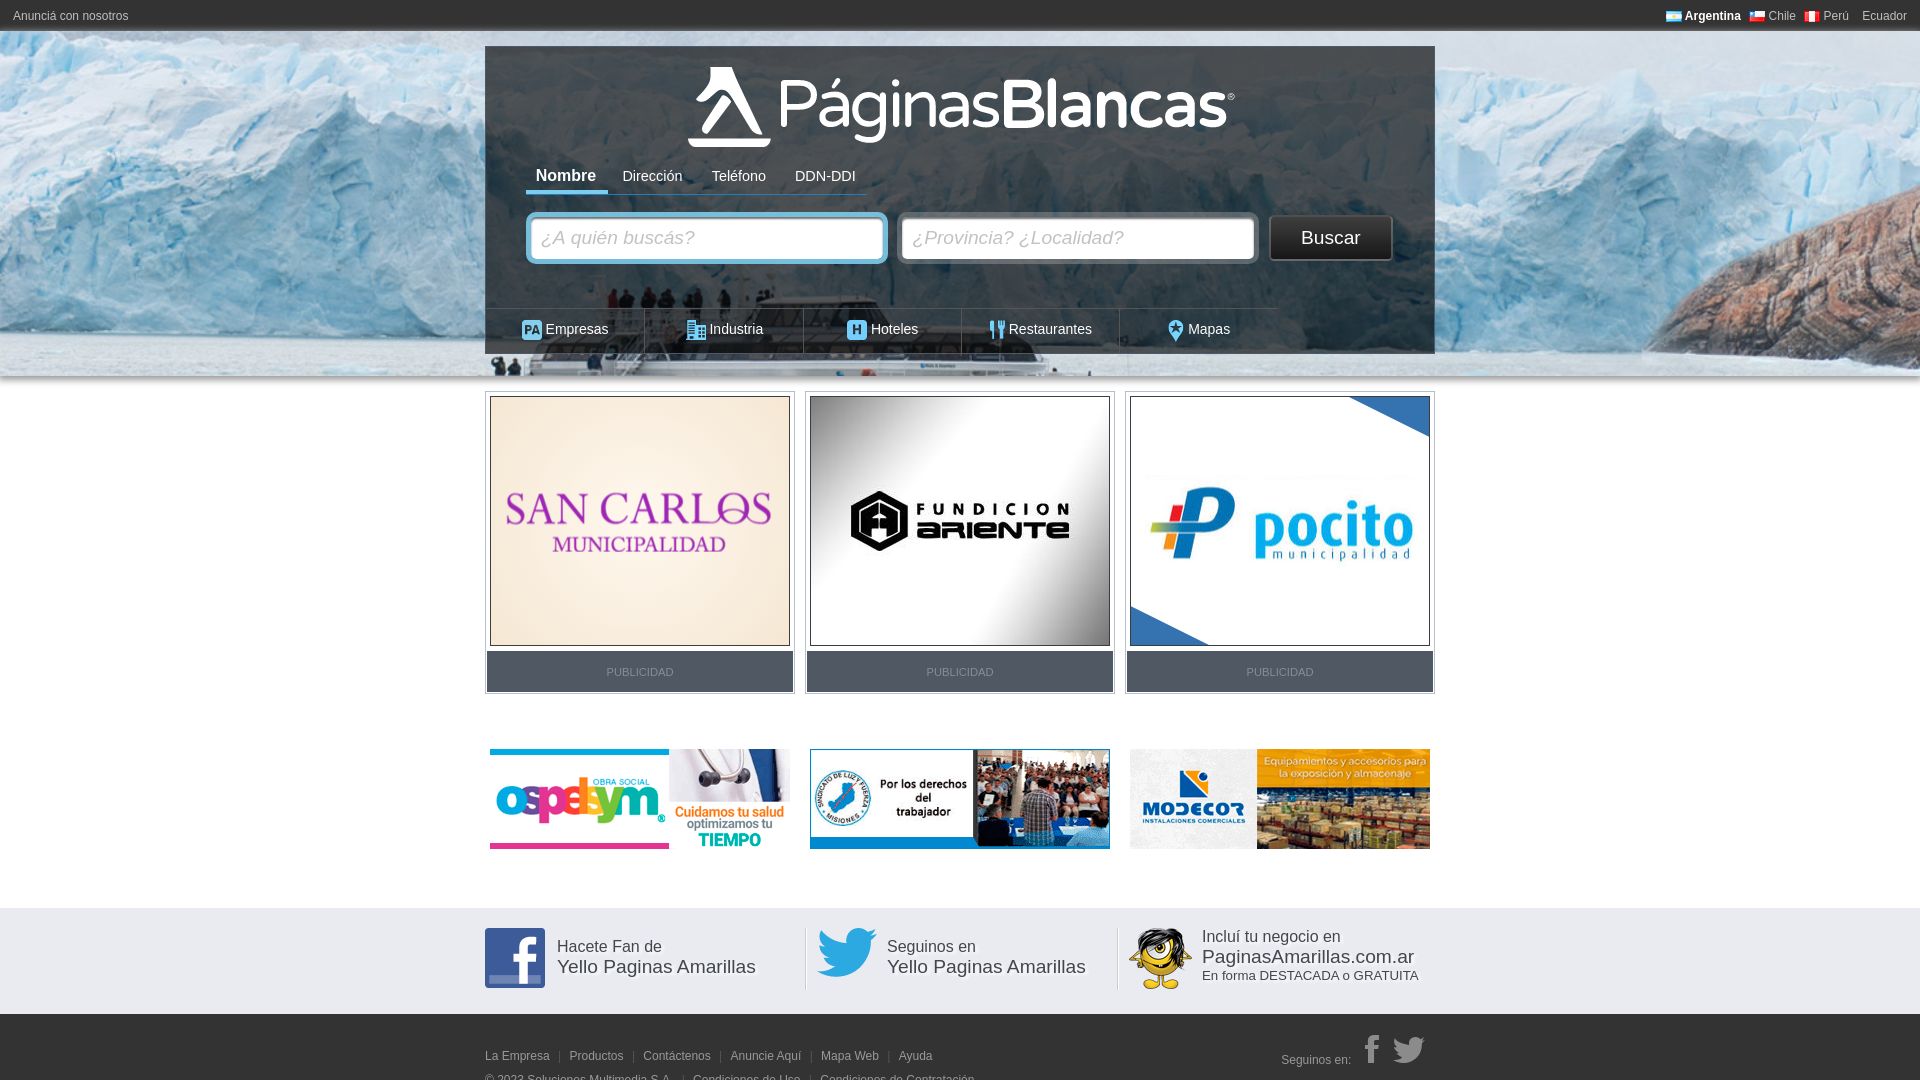 Website status www.paginasblancas.com.ar is   ONLINE